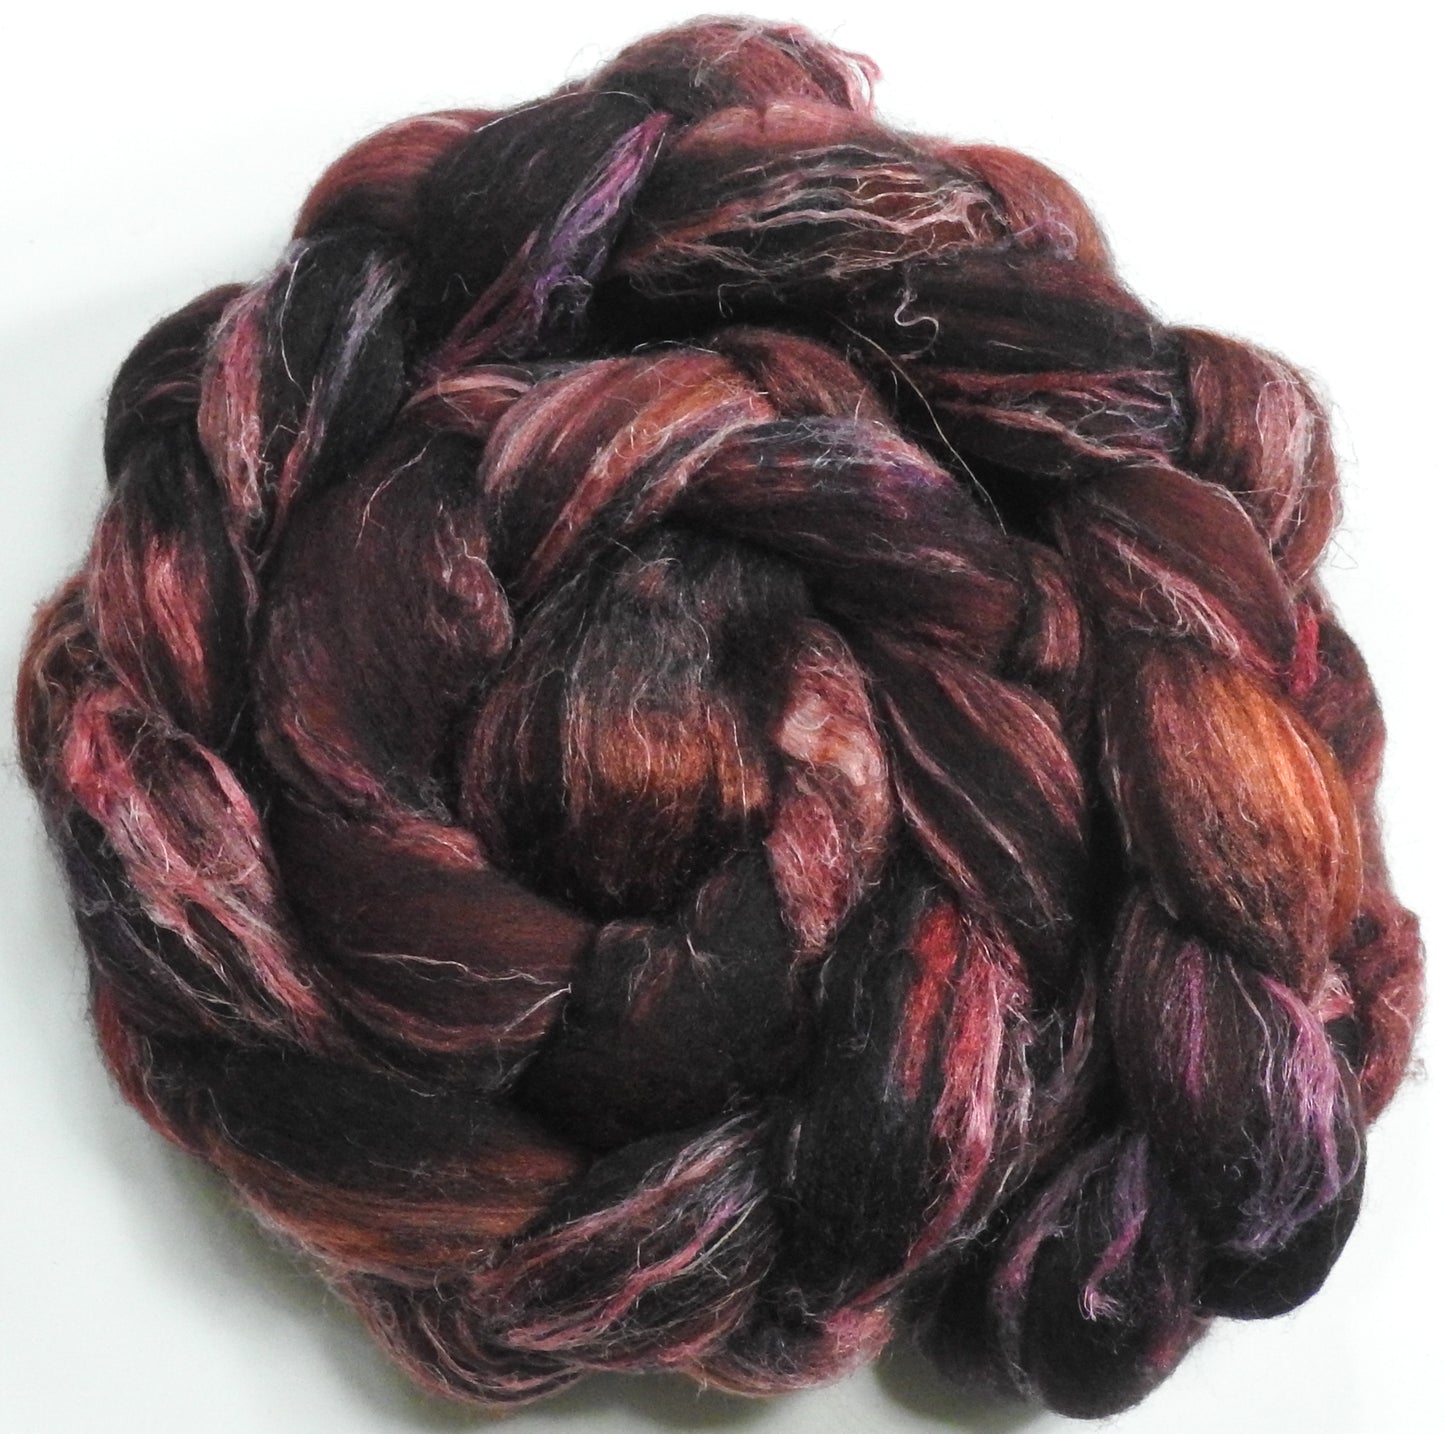 Padauk - Fusion Series - Merino/ Tussah Silk/ Natural Flax (50/25/25)